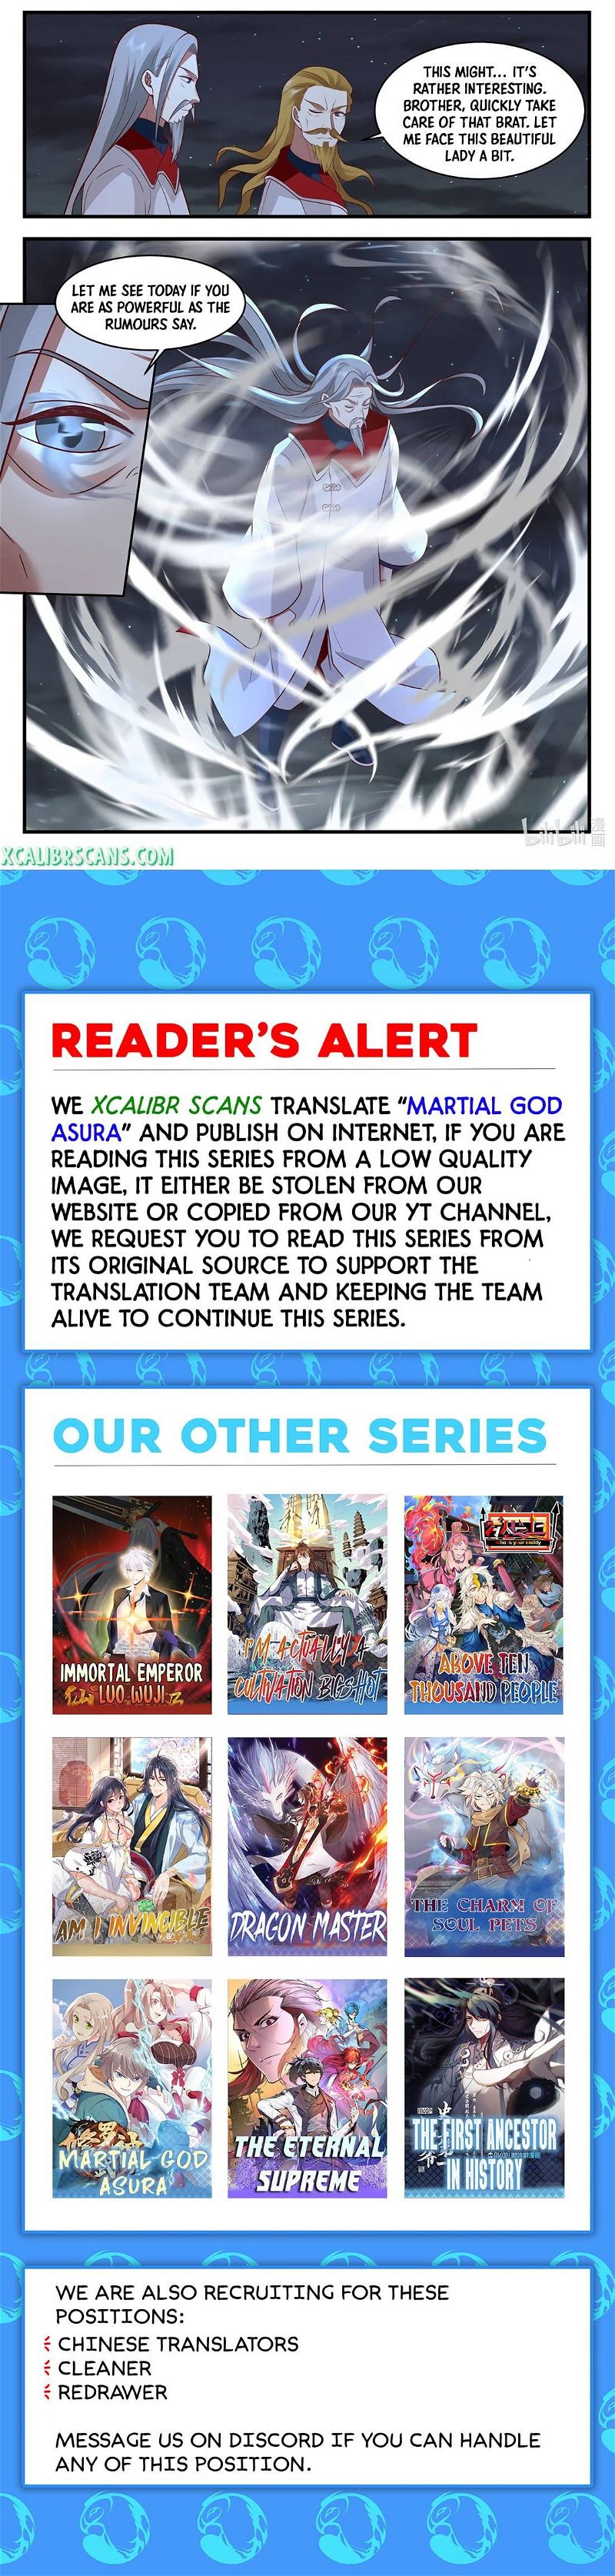 Martial God Asura Chapter 537 page 10